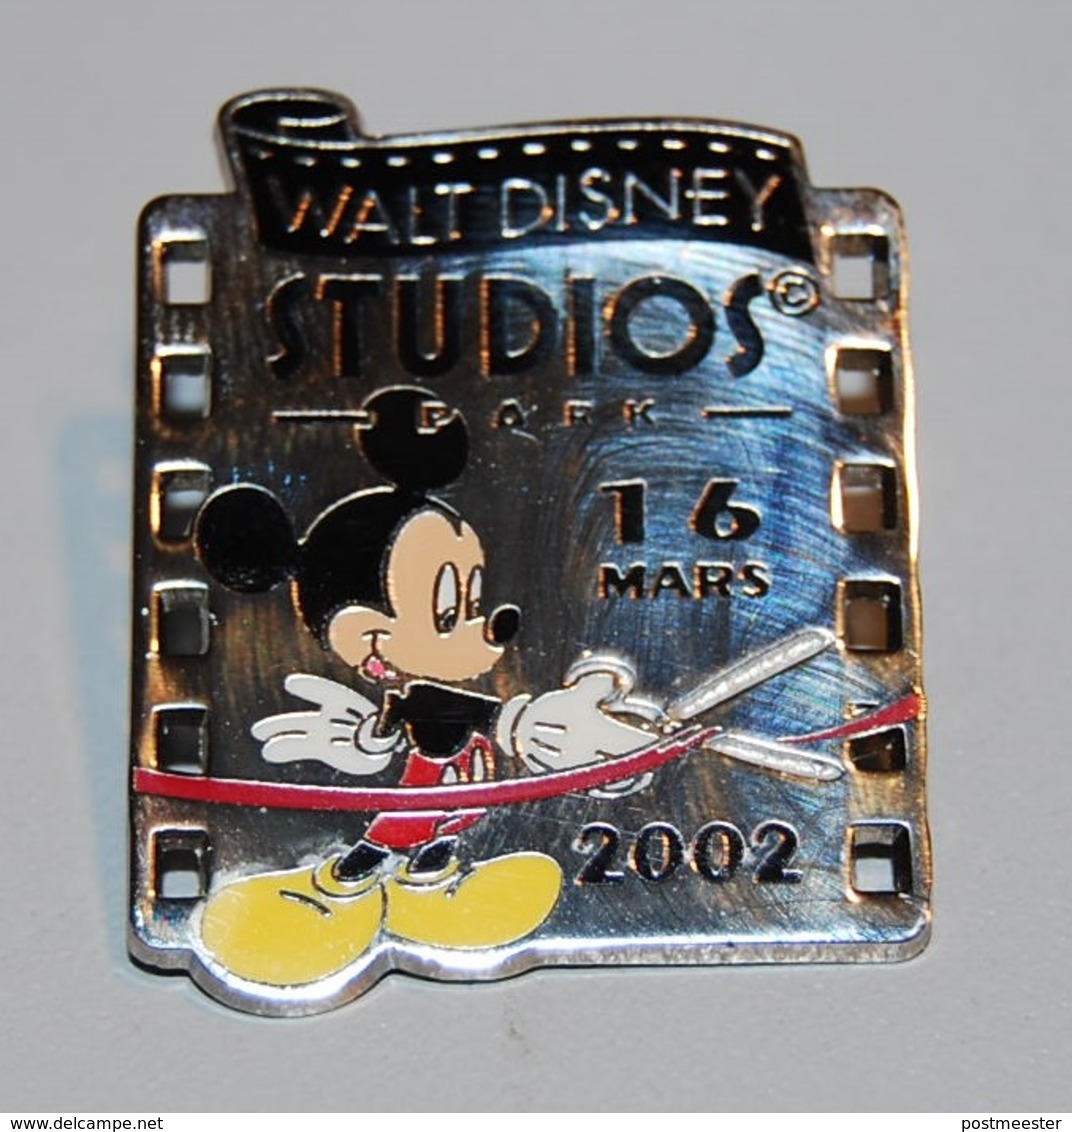 DLRP - Walt Disney Studios Park Paris - 16 MARS 2002 (Mickey Cutting Ribbon) LE 3000 - Disney